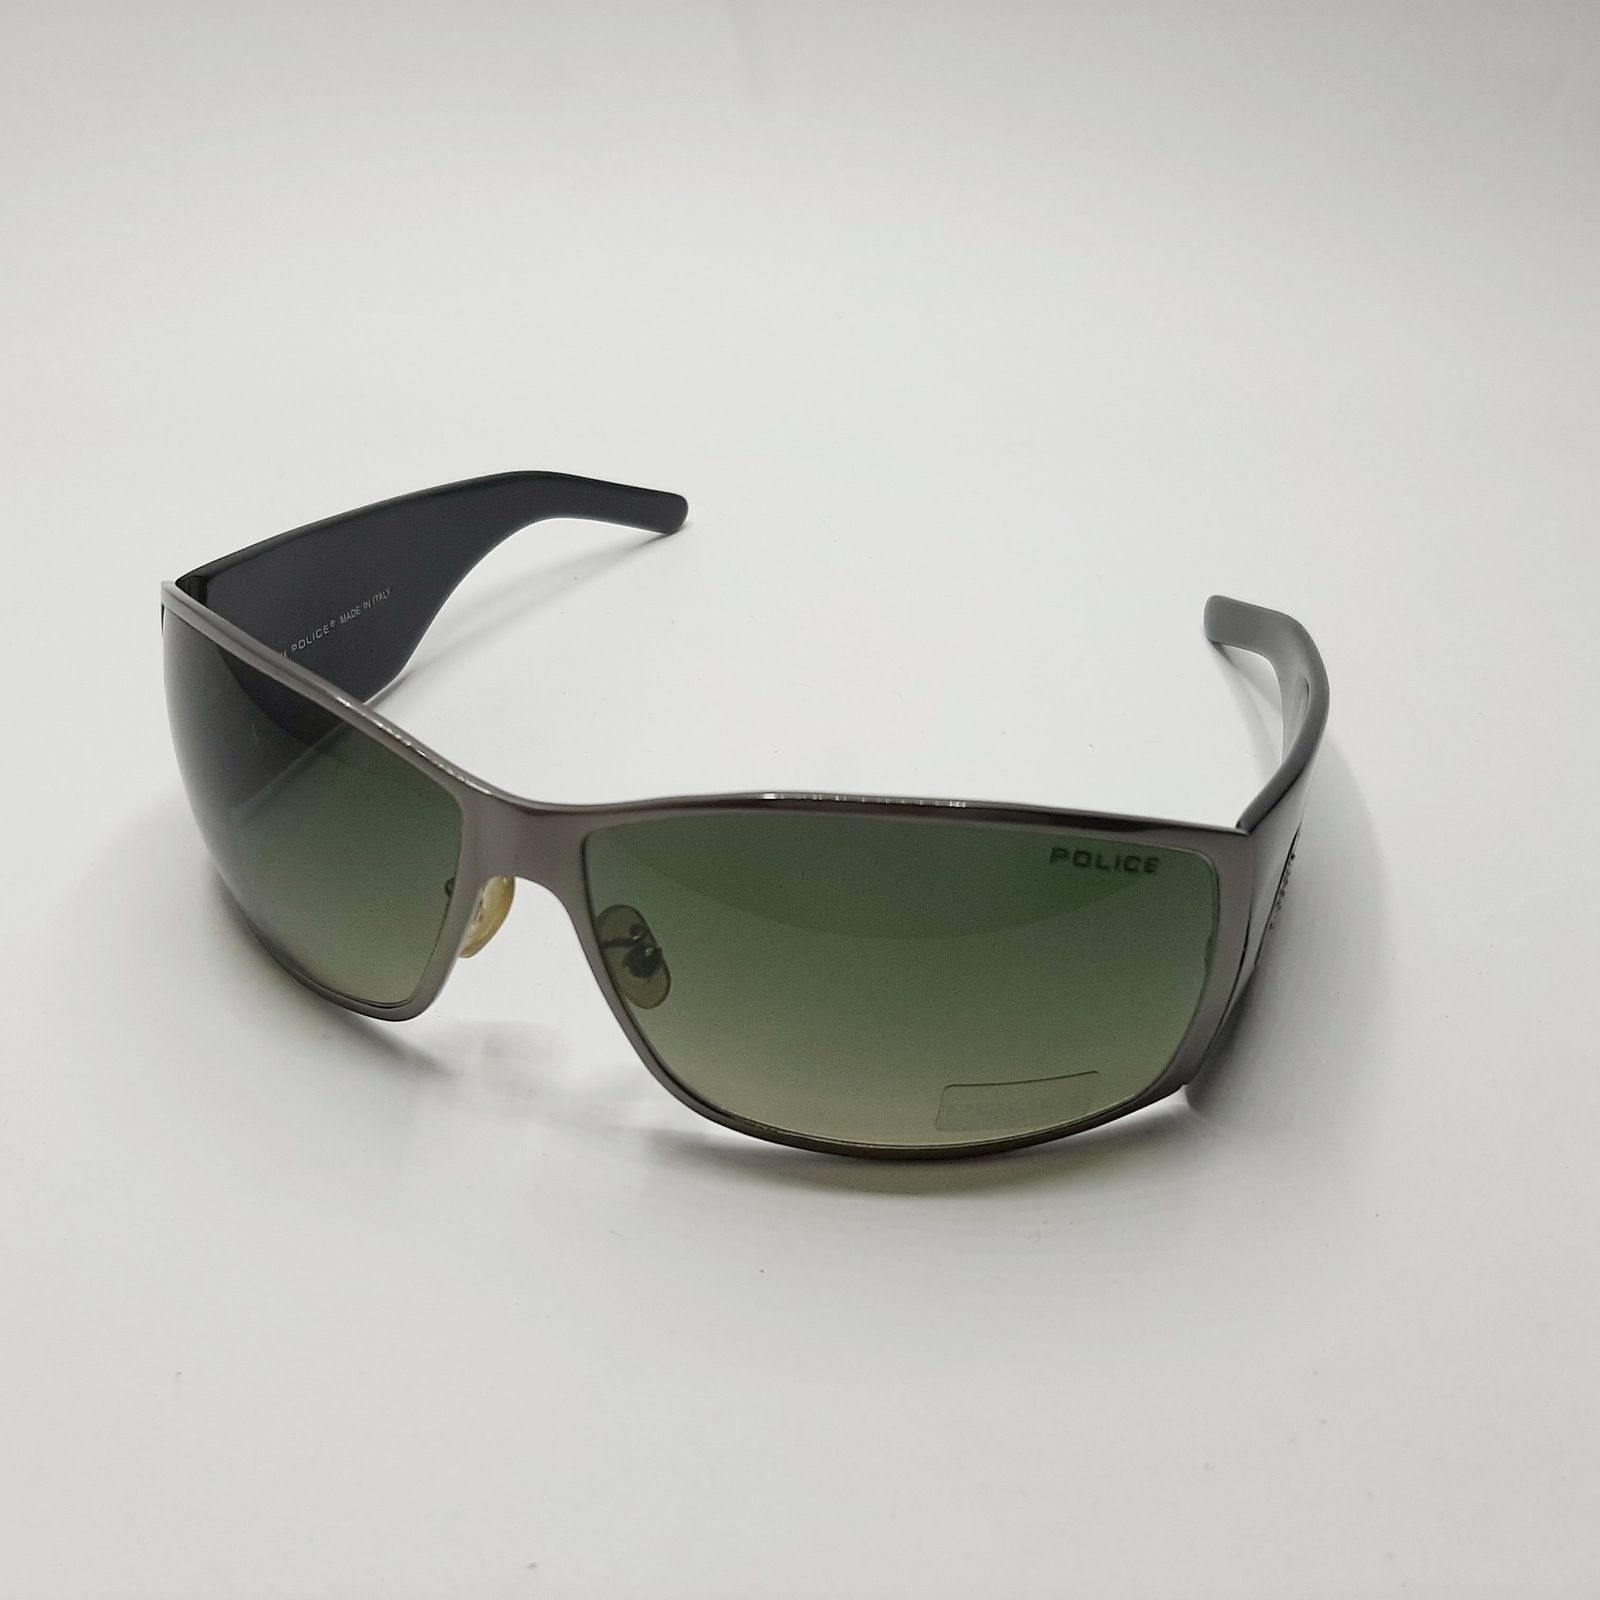 عینک آفتابی پلیس مدل S811c2 -  - 4